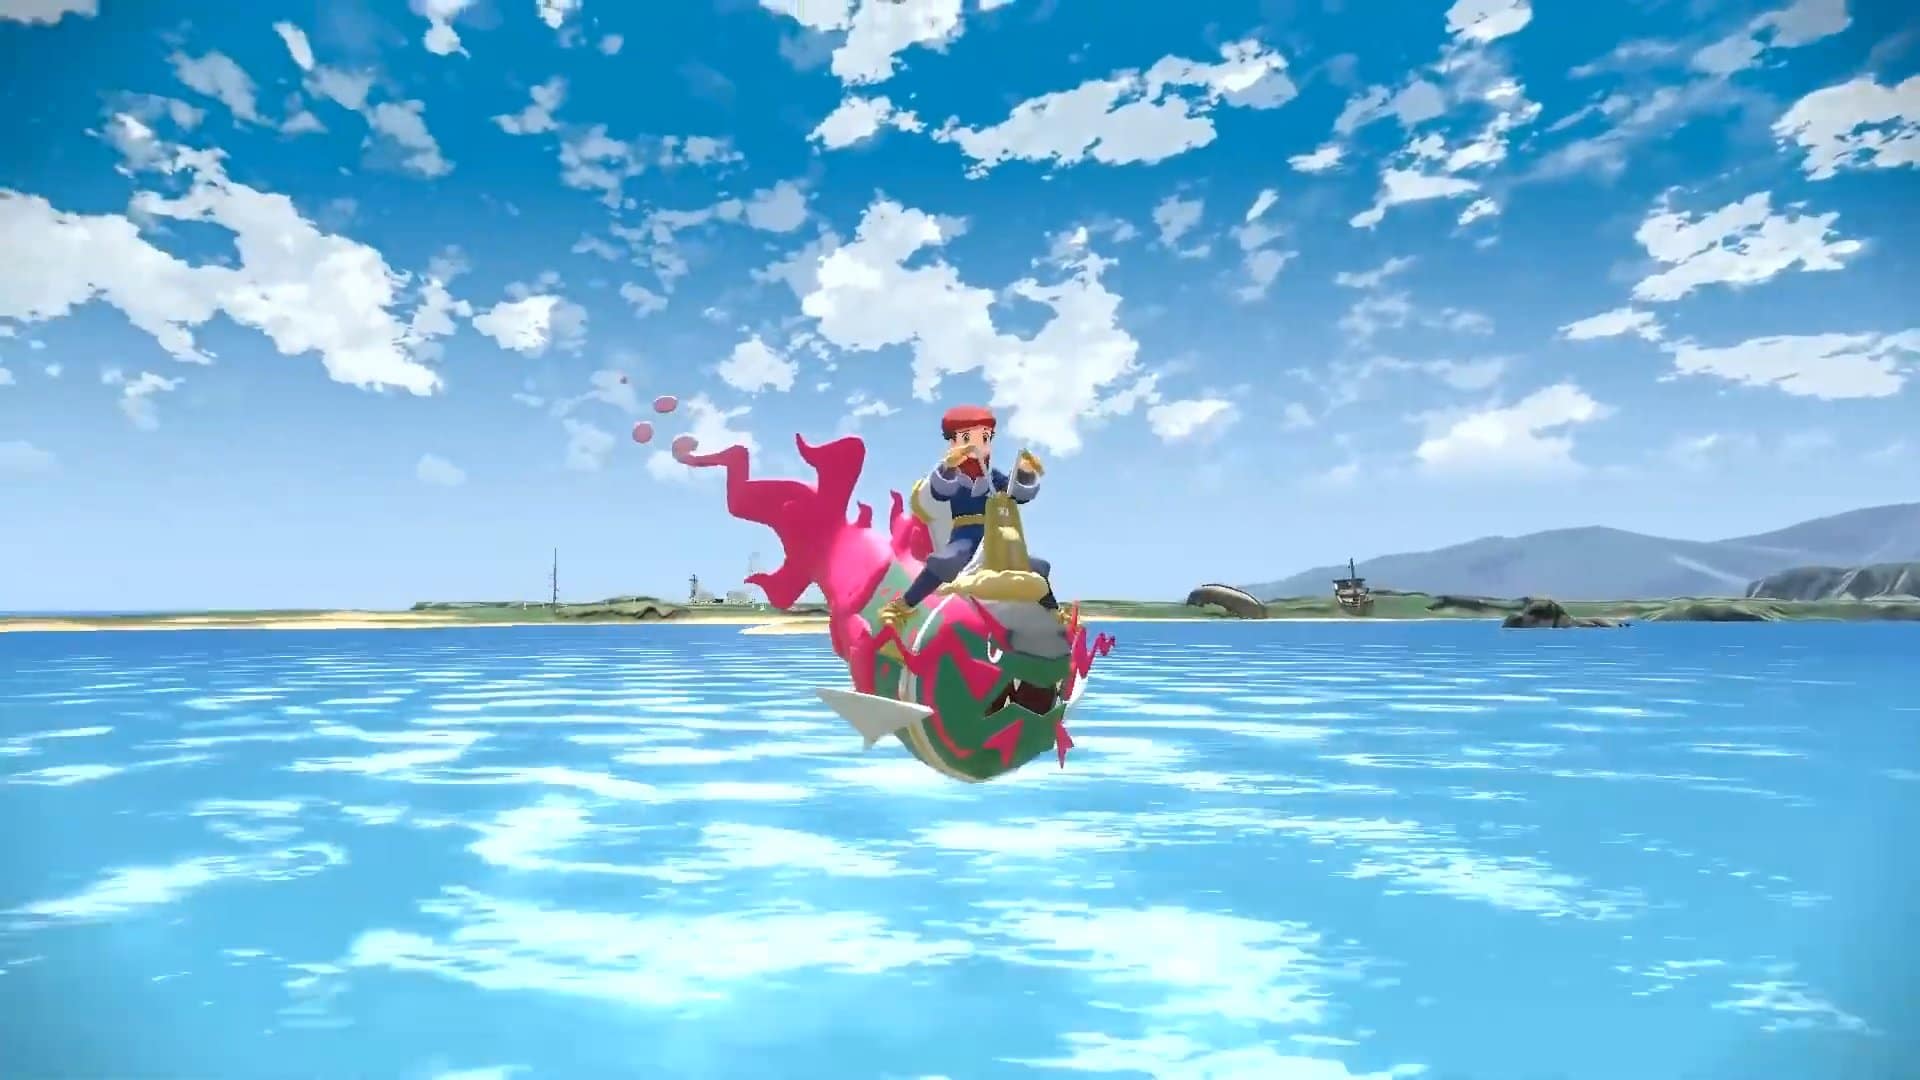 Un extraño glitch al realizar un doble salto con Basculegion en Leyendas Pokémon: Arceus